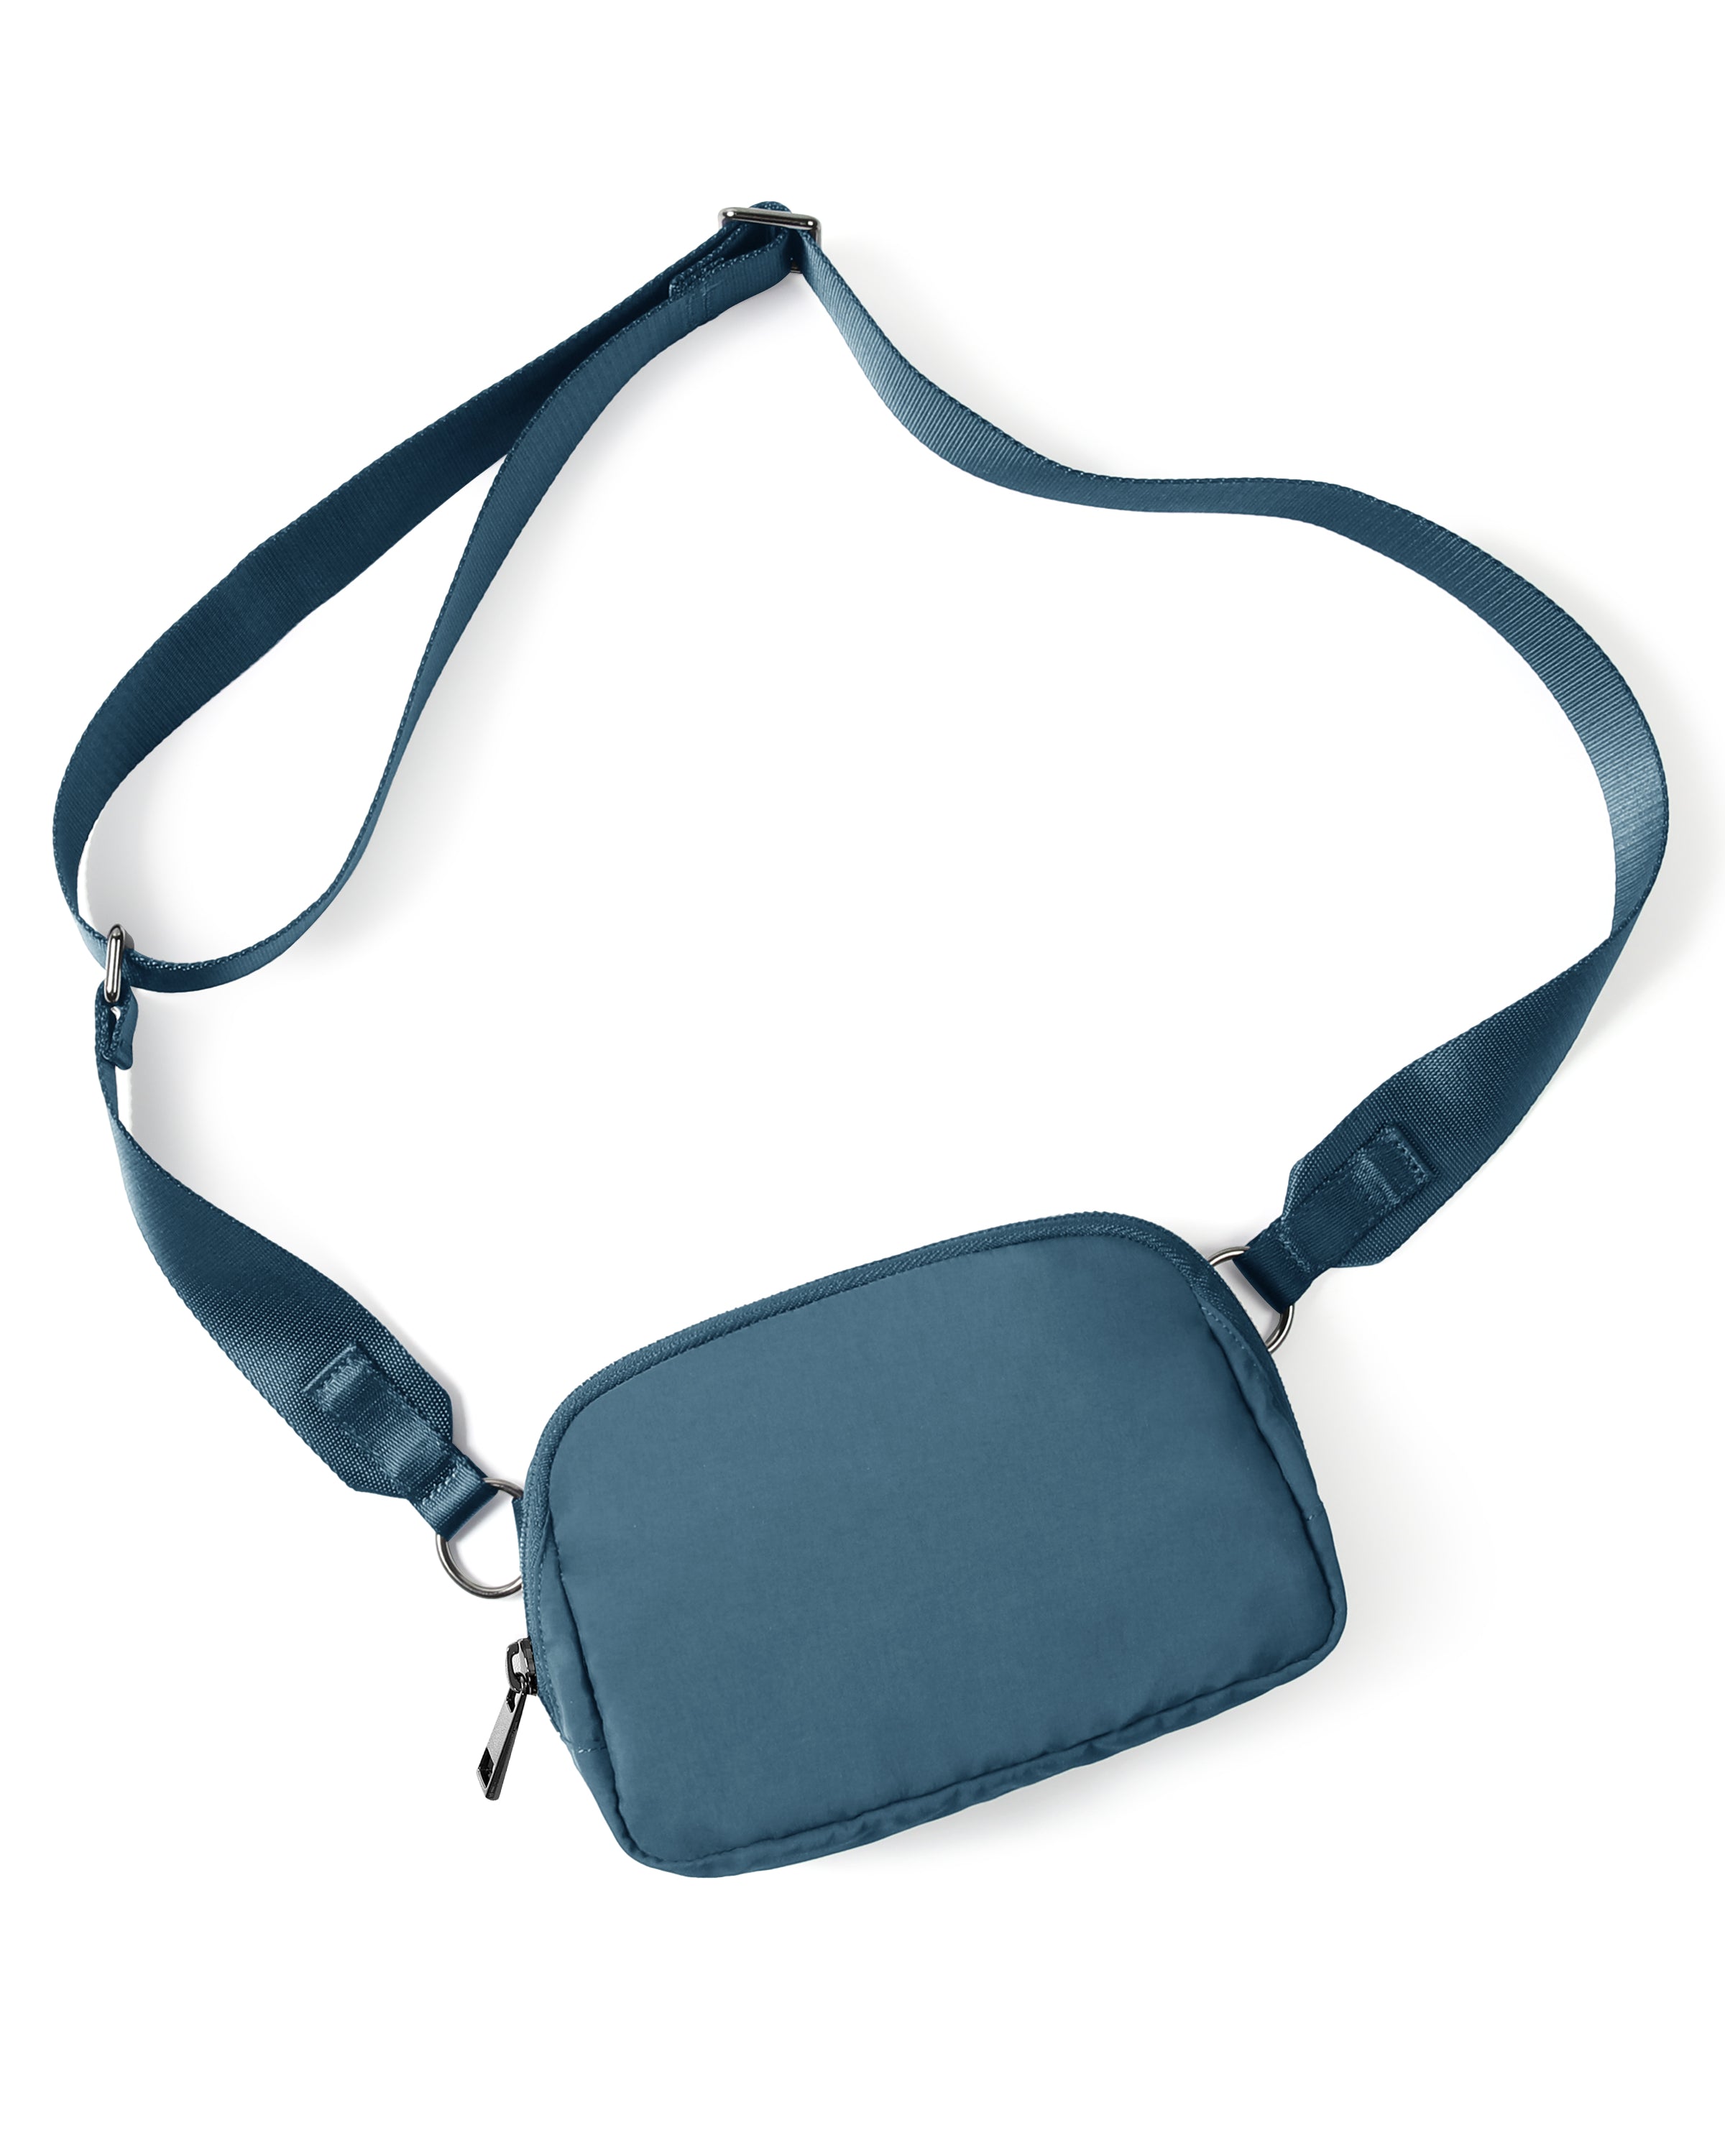 Unisex Mini Crossbody Bag Blue 8" x 2" x 5.5" - ododos